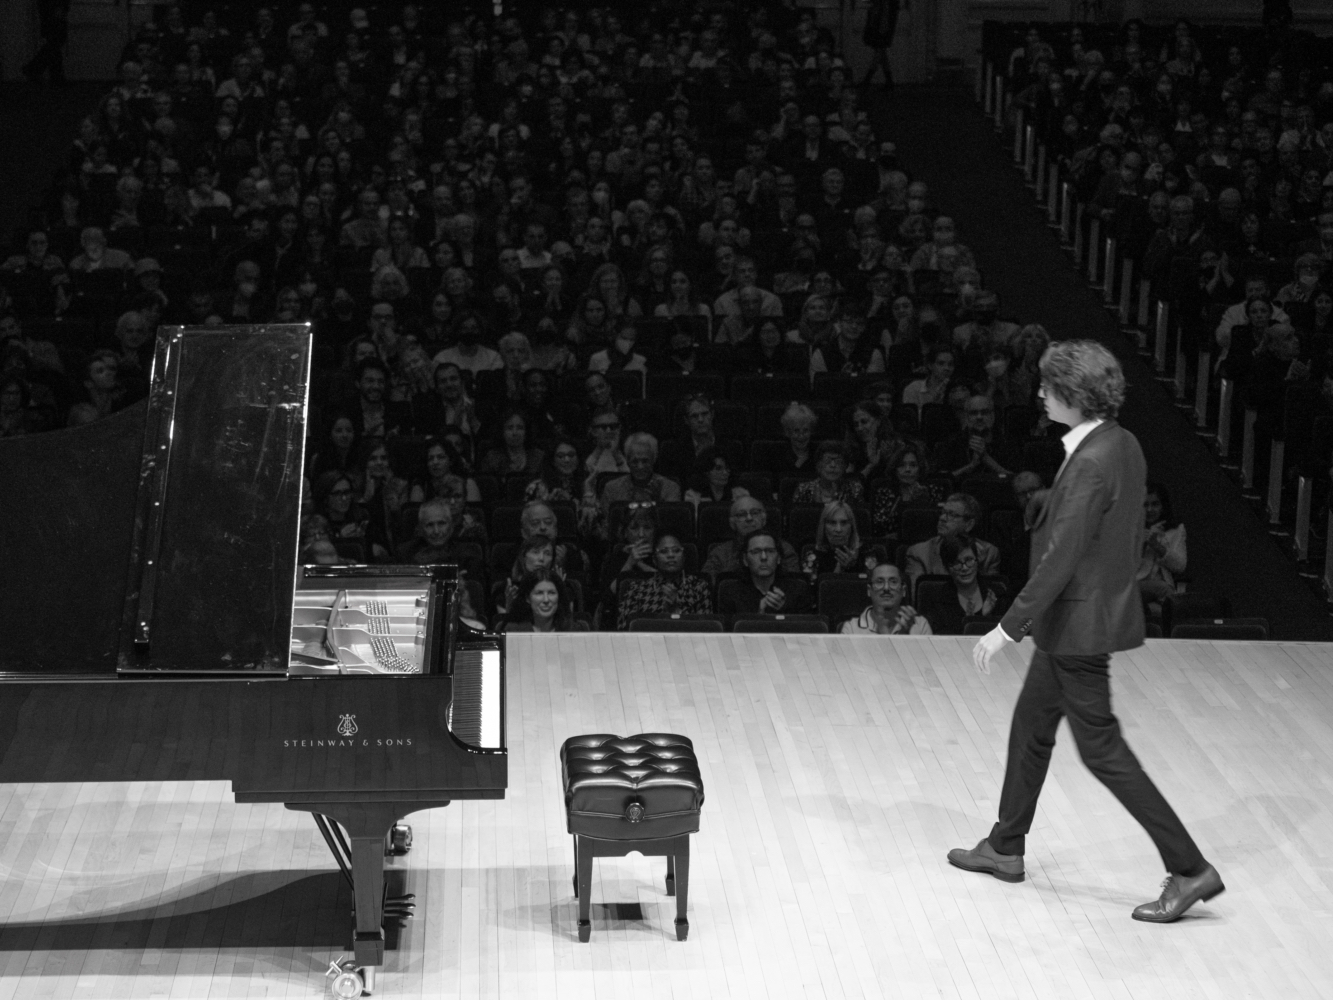 Lucas Debargue: The future of classical music